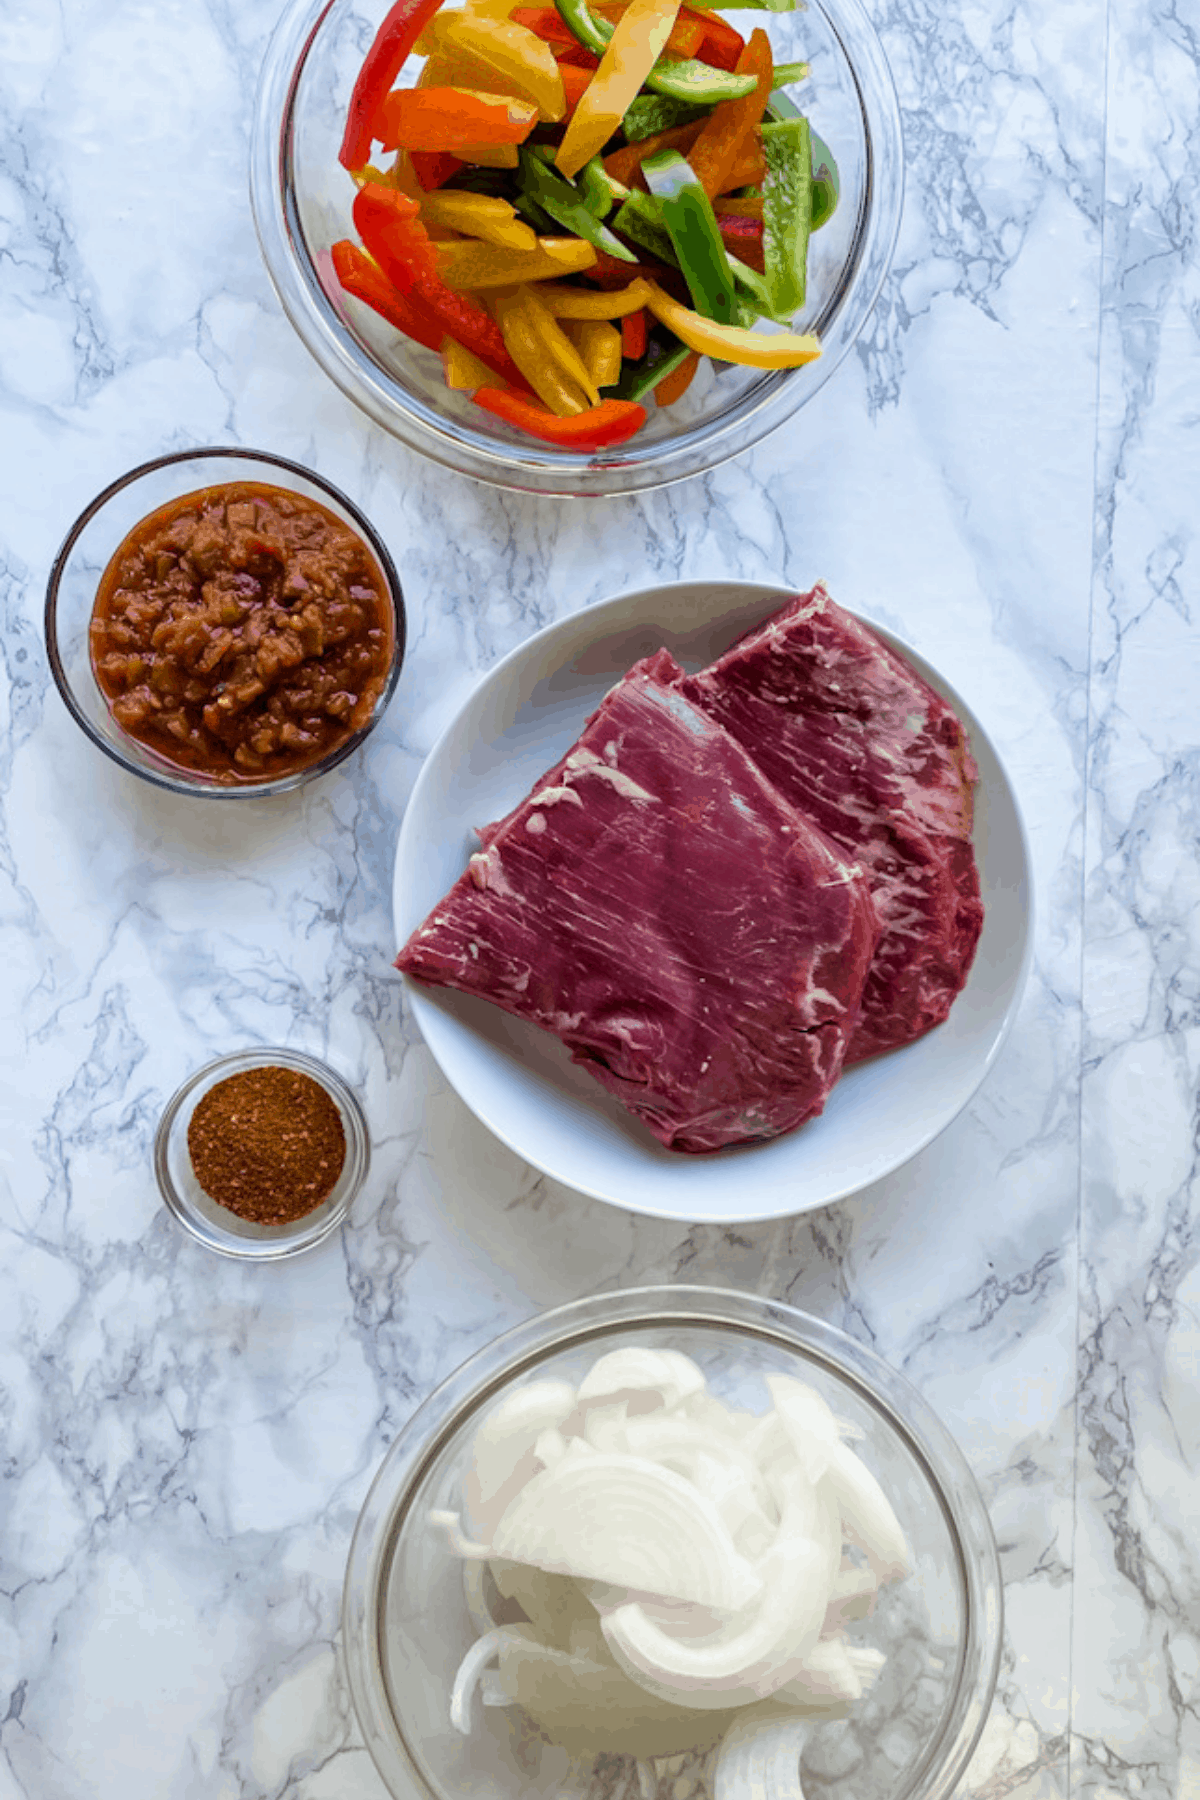 All the ingredients needed to make crockpot steak fajitas.